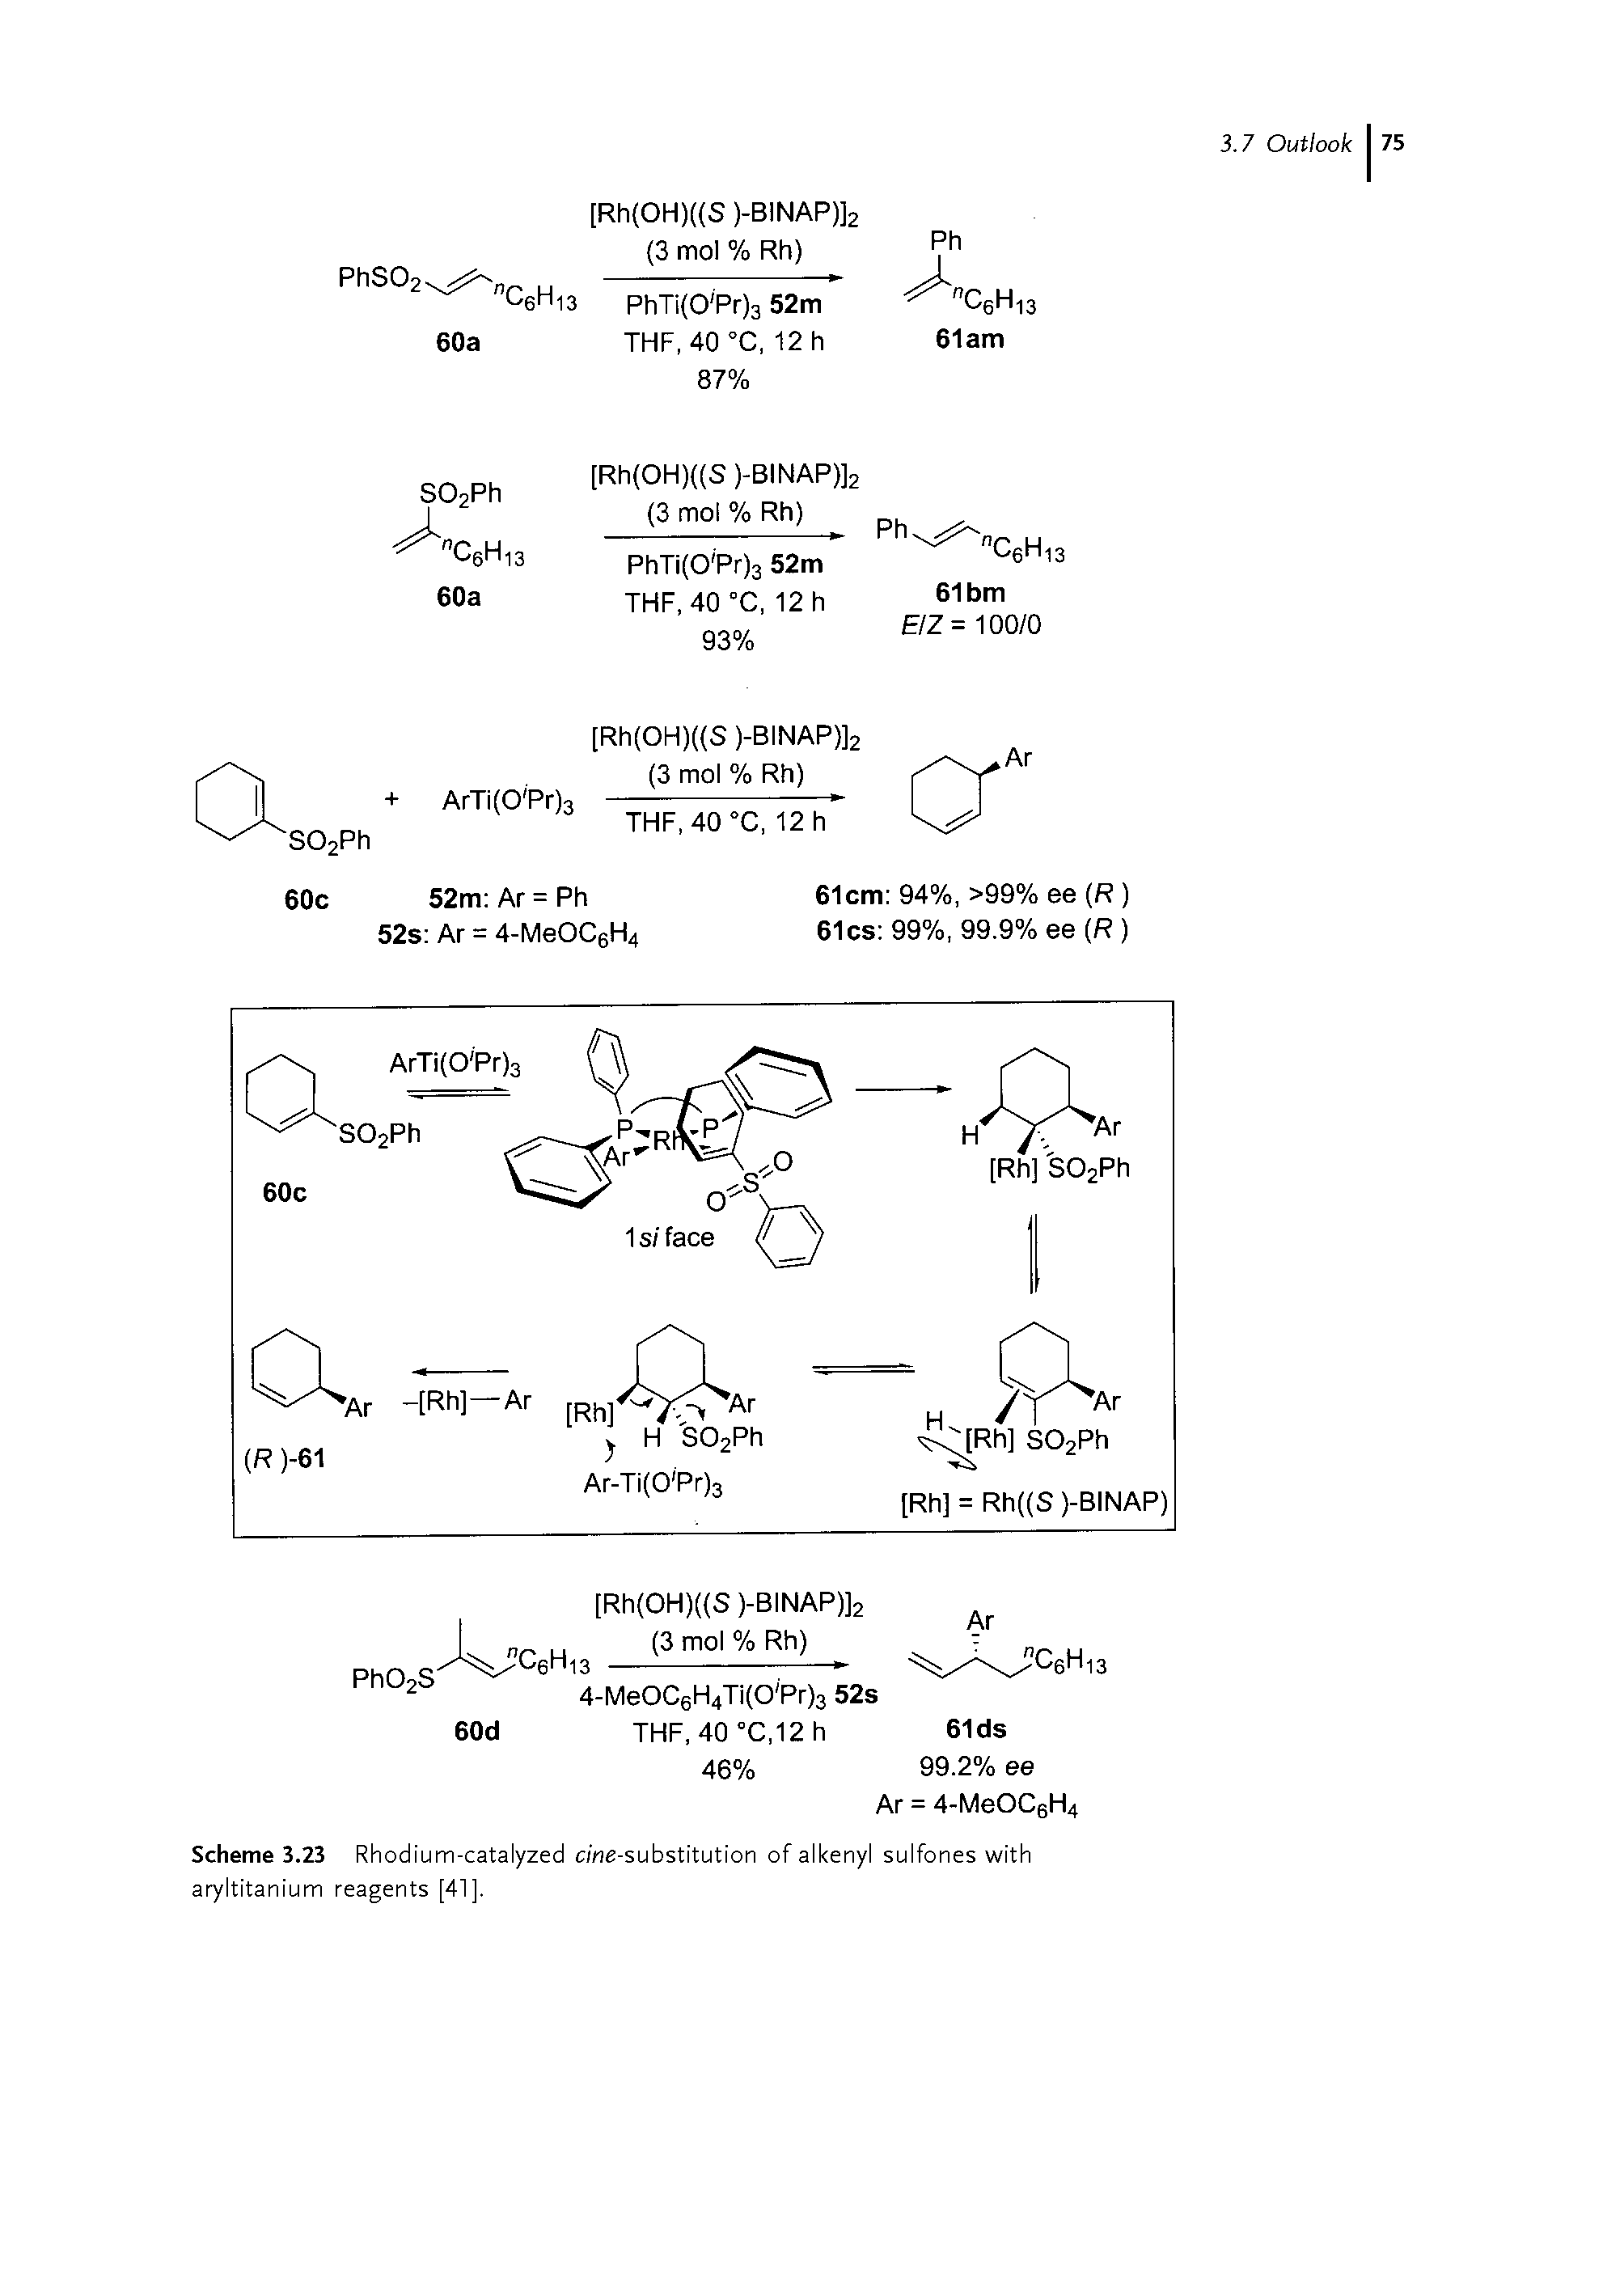 Scheme 3.23 Rhodium-catalyzed c/ne-substitution of alkenyl sulfones with aryltitanium reagents [41].